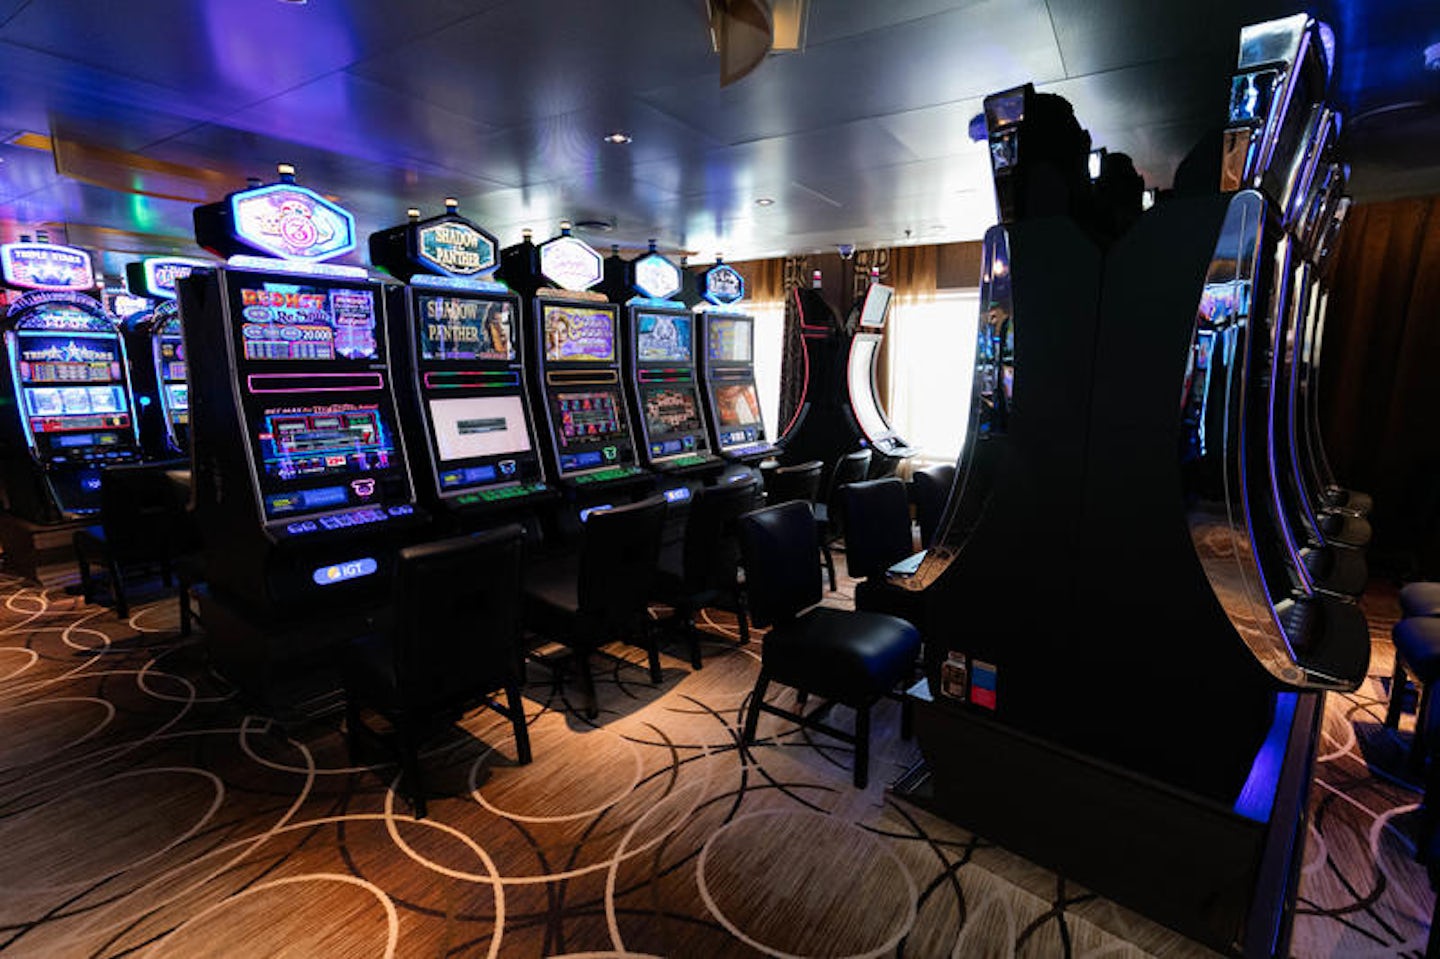 koningsdam cruise ship casino